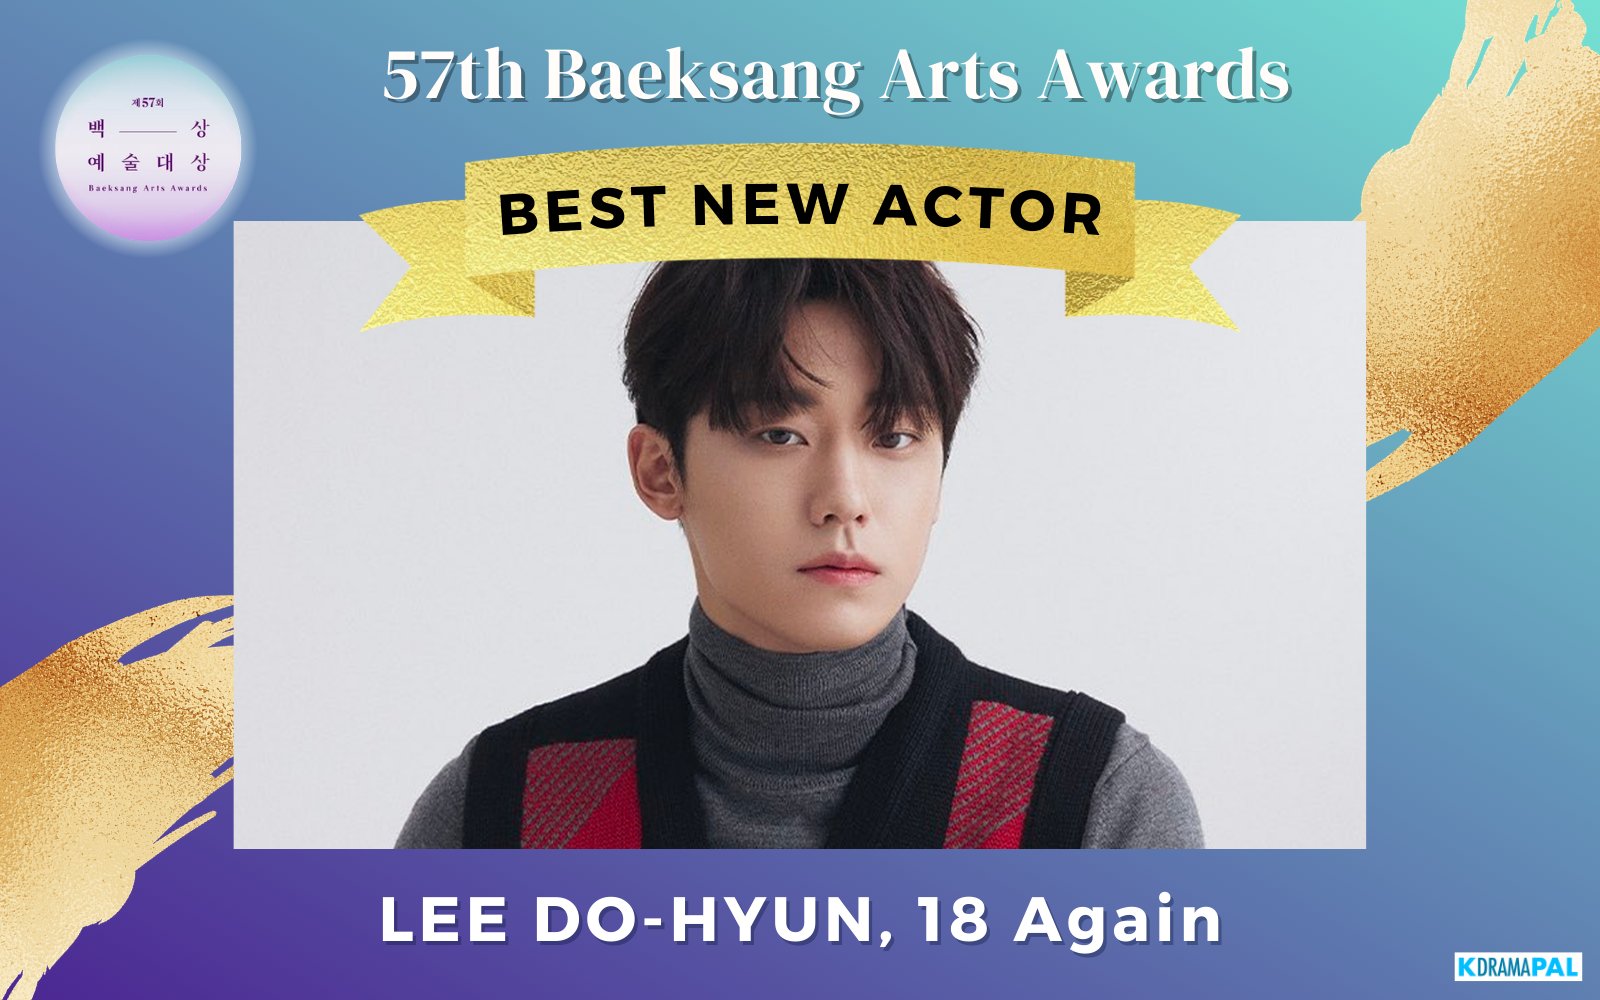 57th Baeksang Arts Awards Mejor actor nuevo - Lee Do-hyun